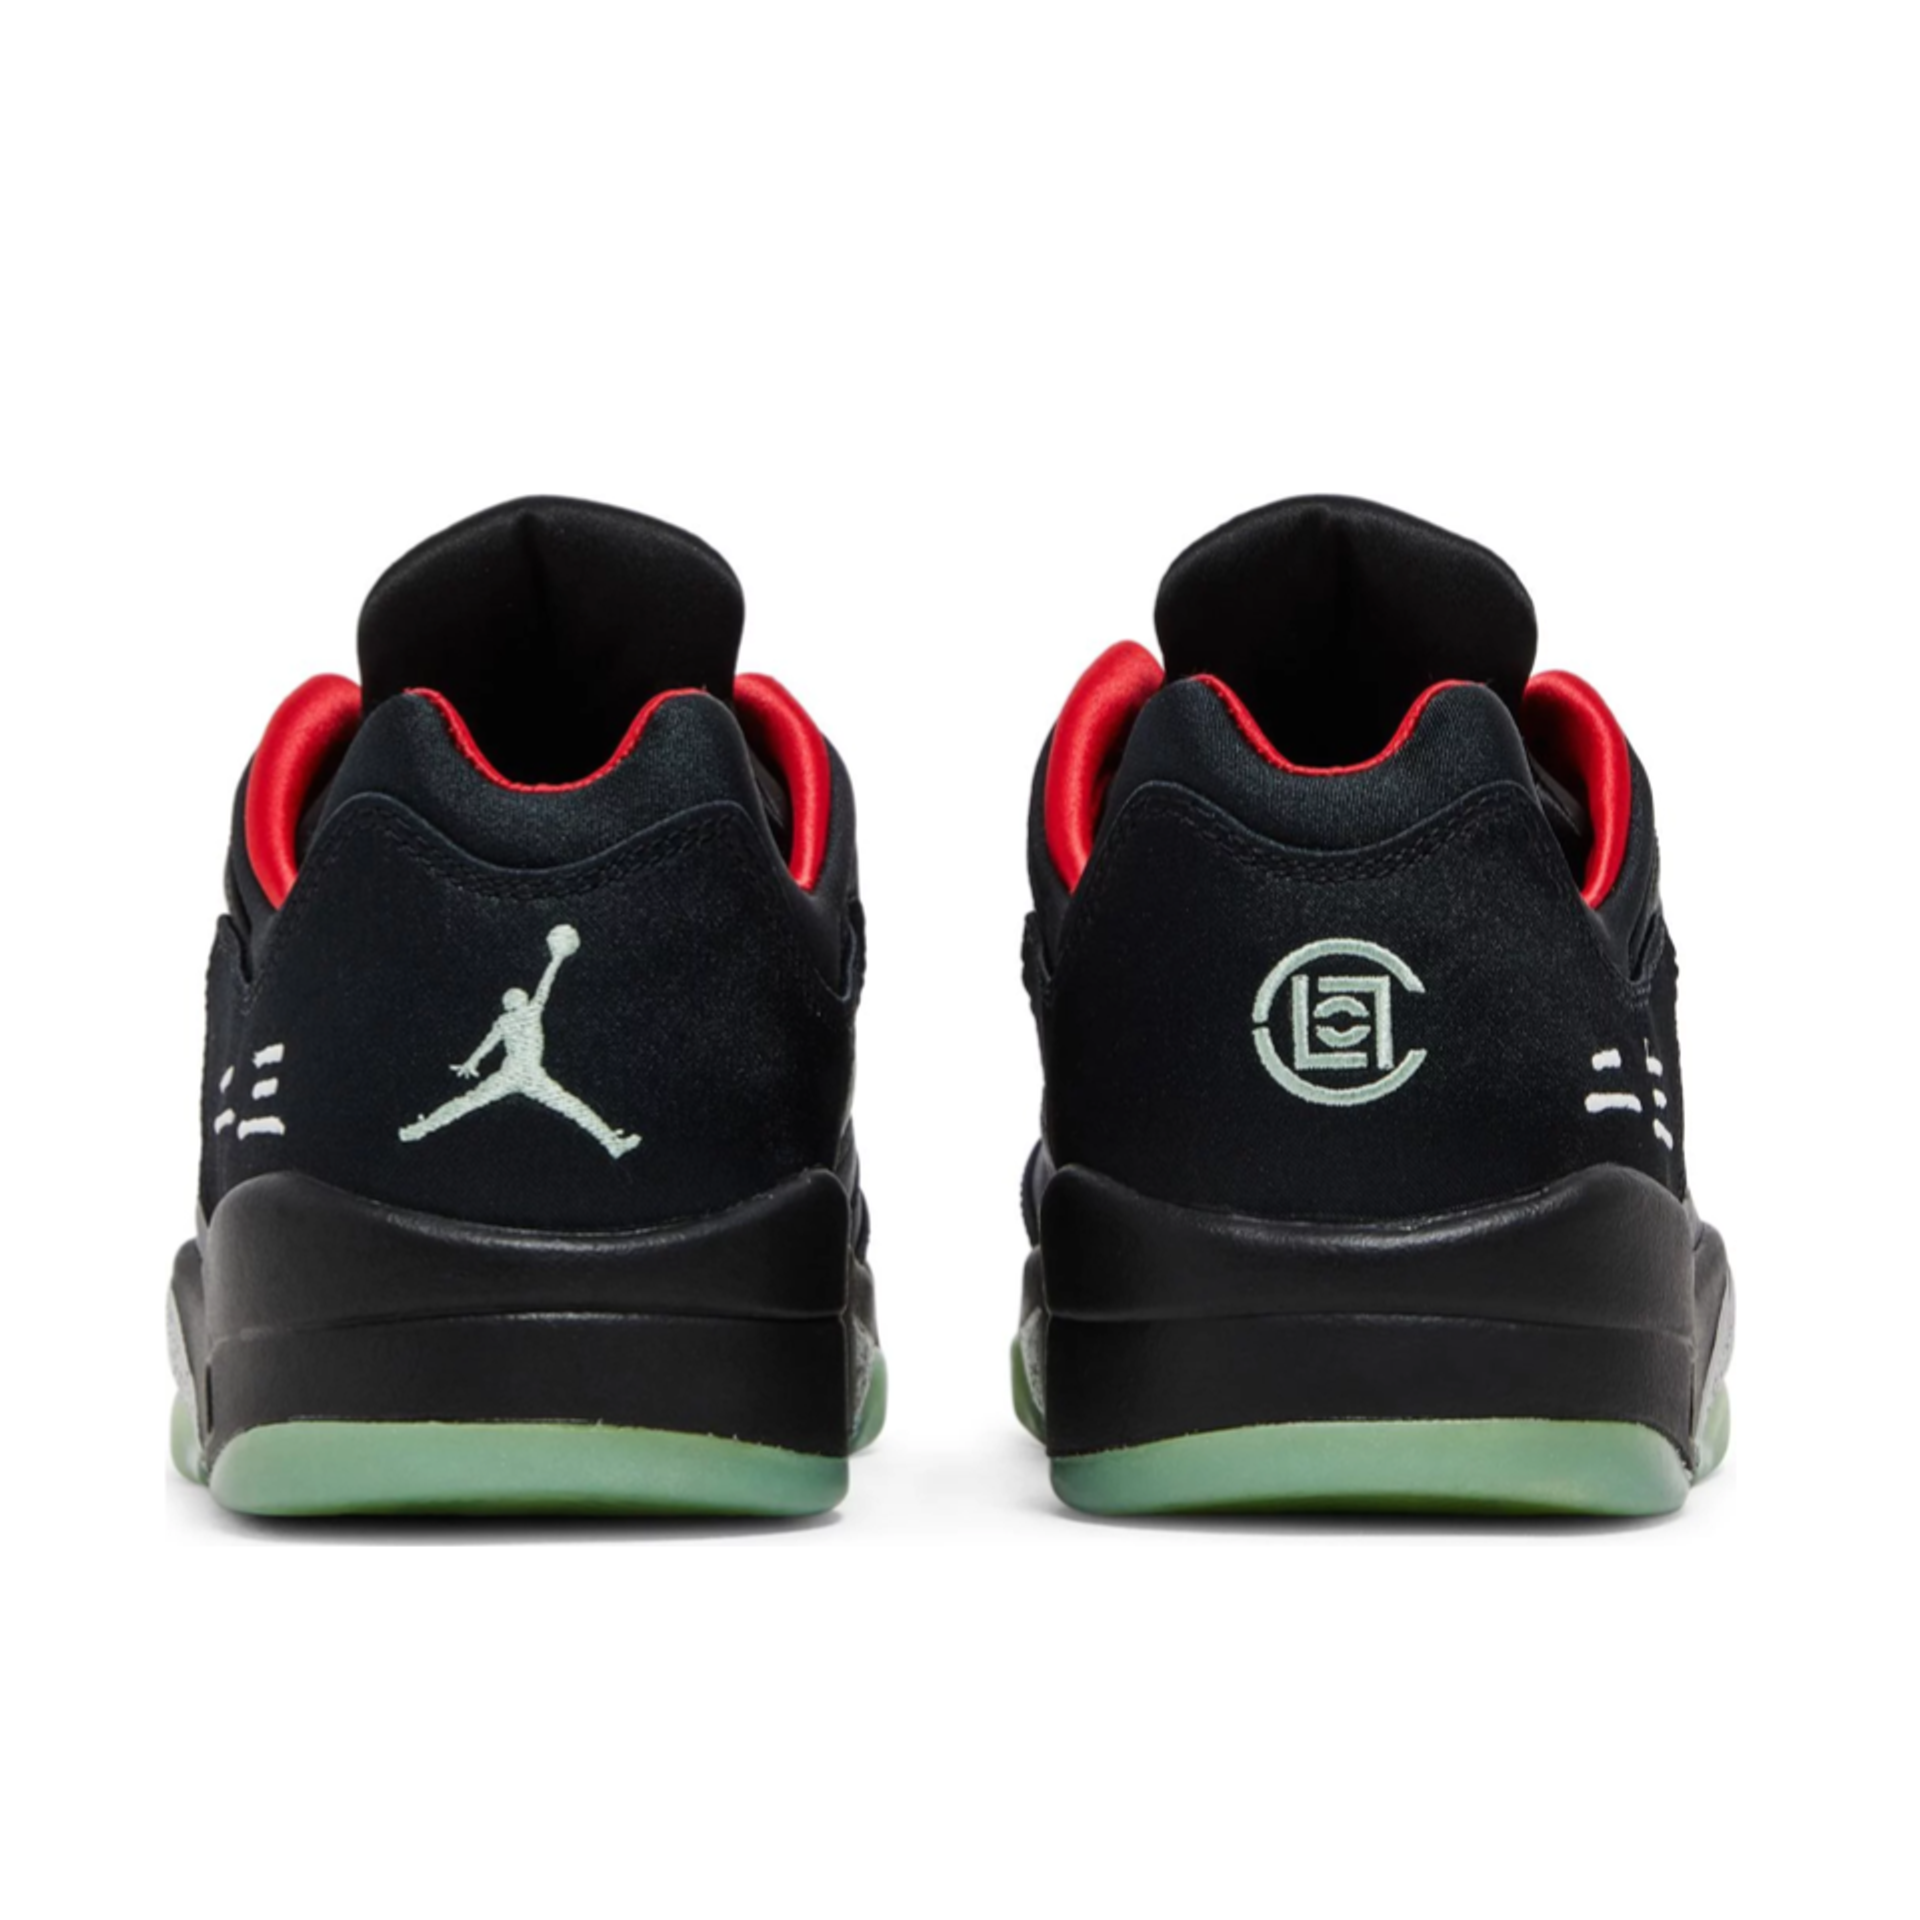 CLOT x Air Jordan 5 Retro Low 'Black Classic Jade'